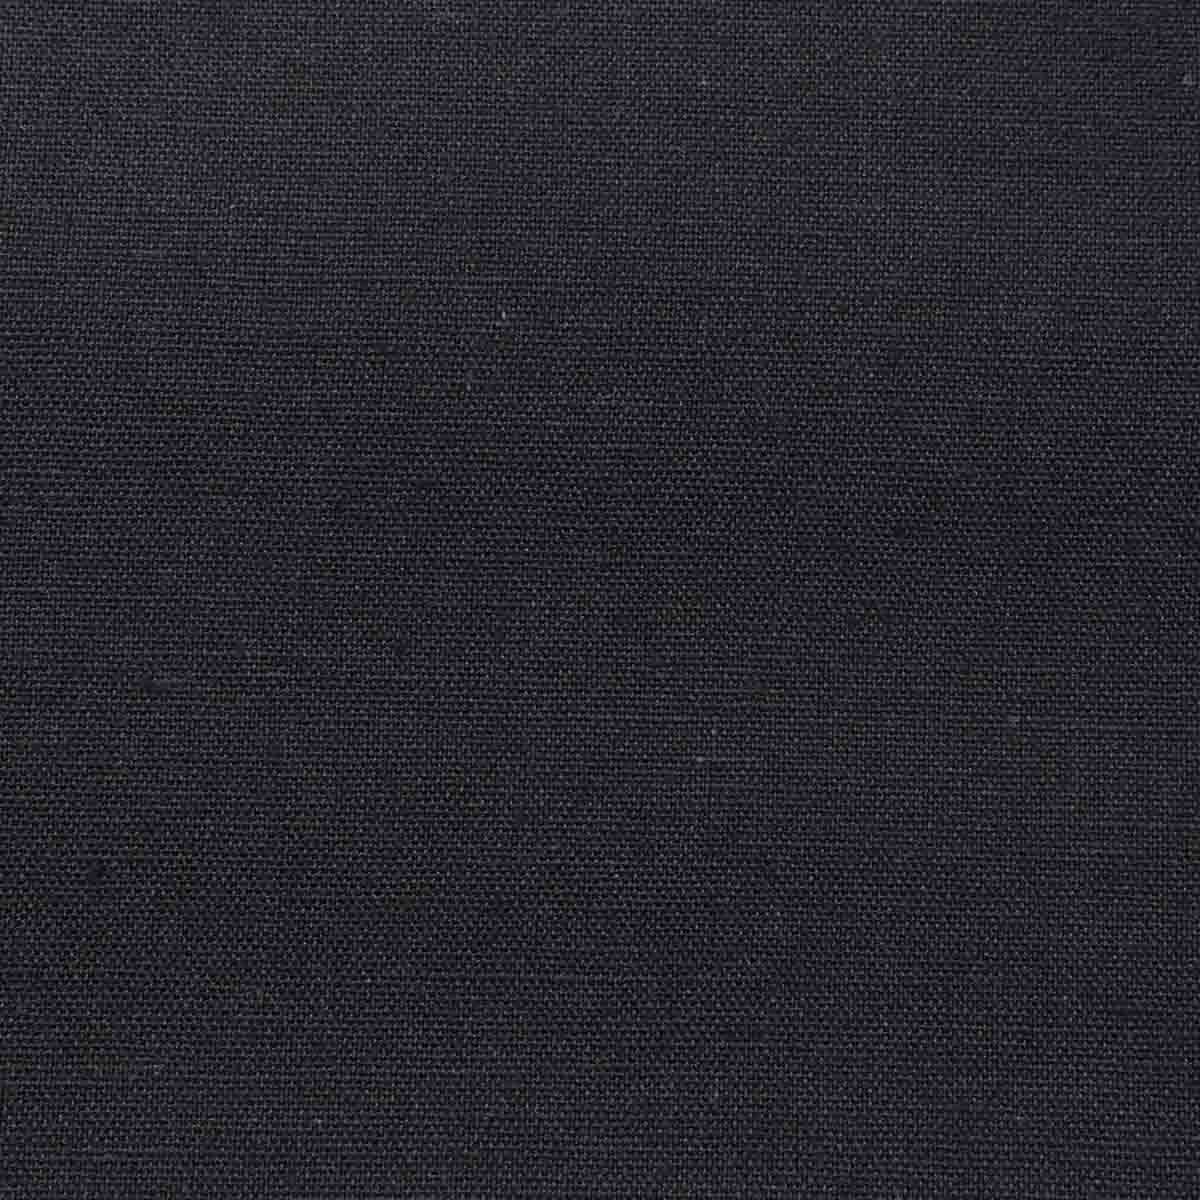 Dhabu Plain Cotton Black (2)